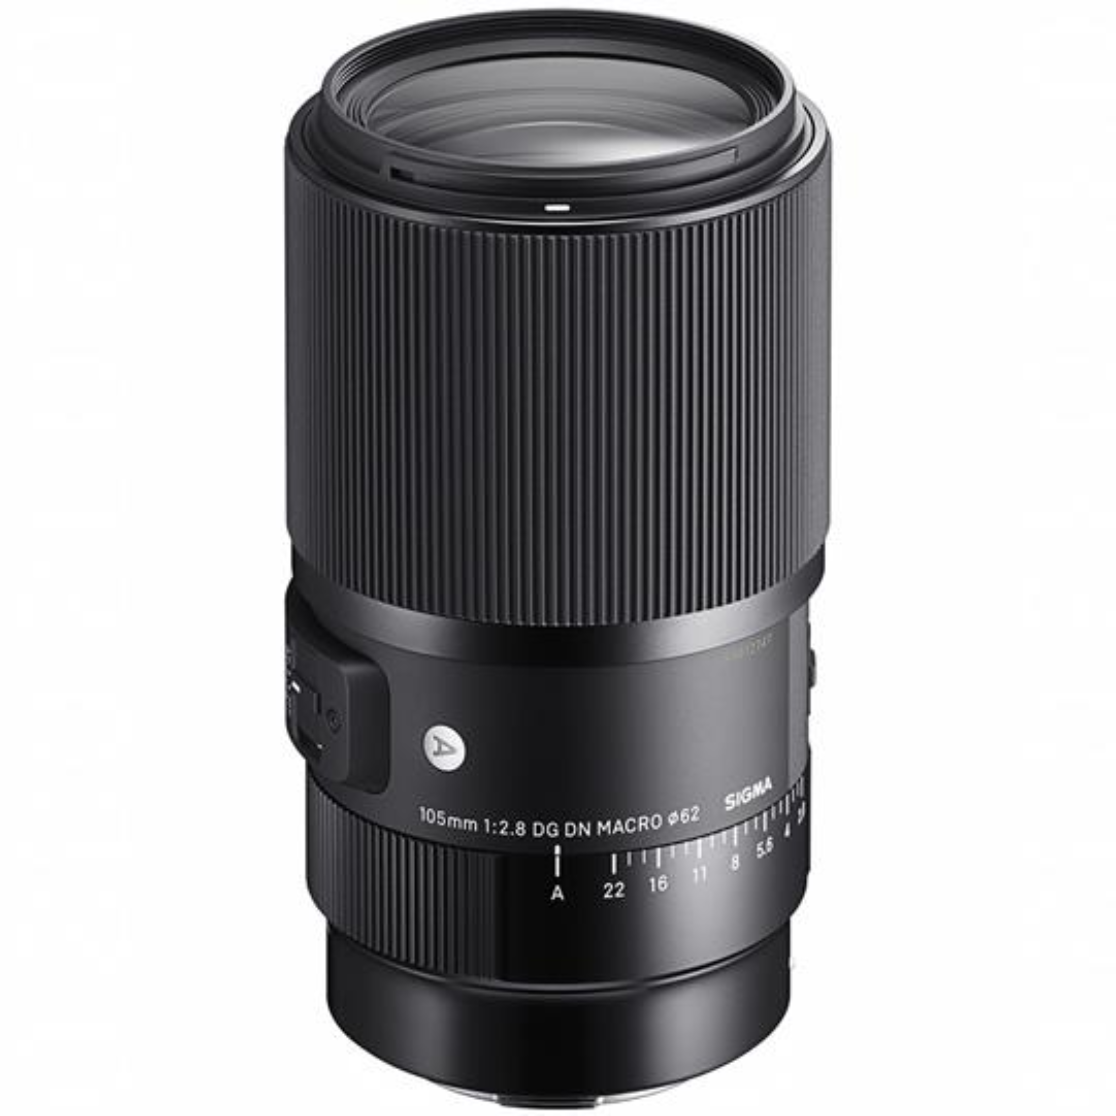 Sigma Art 105mm F2.8 DG DN Macro Lens